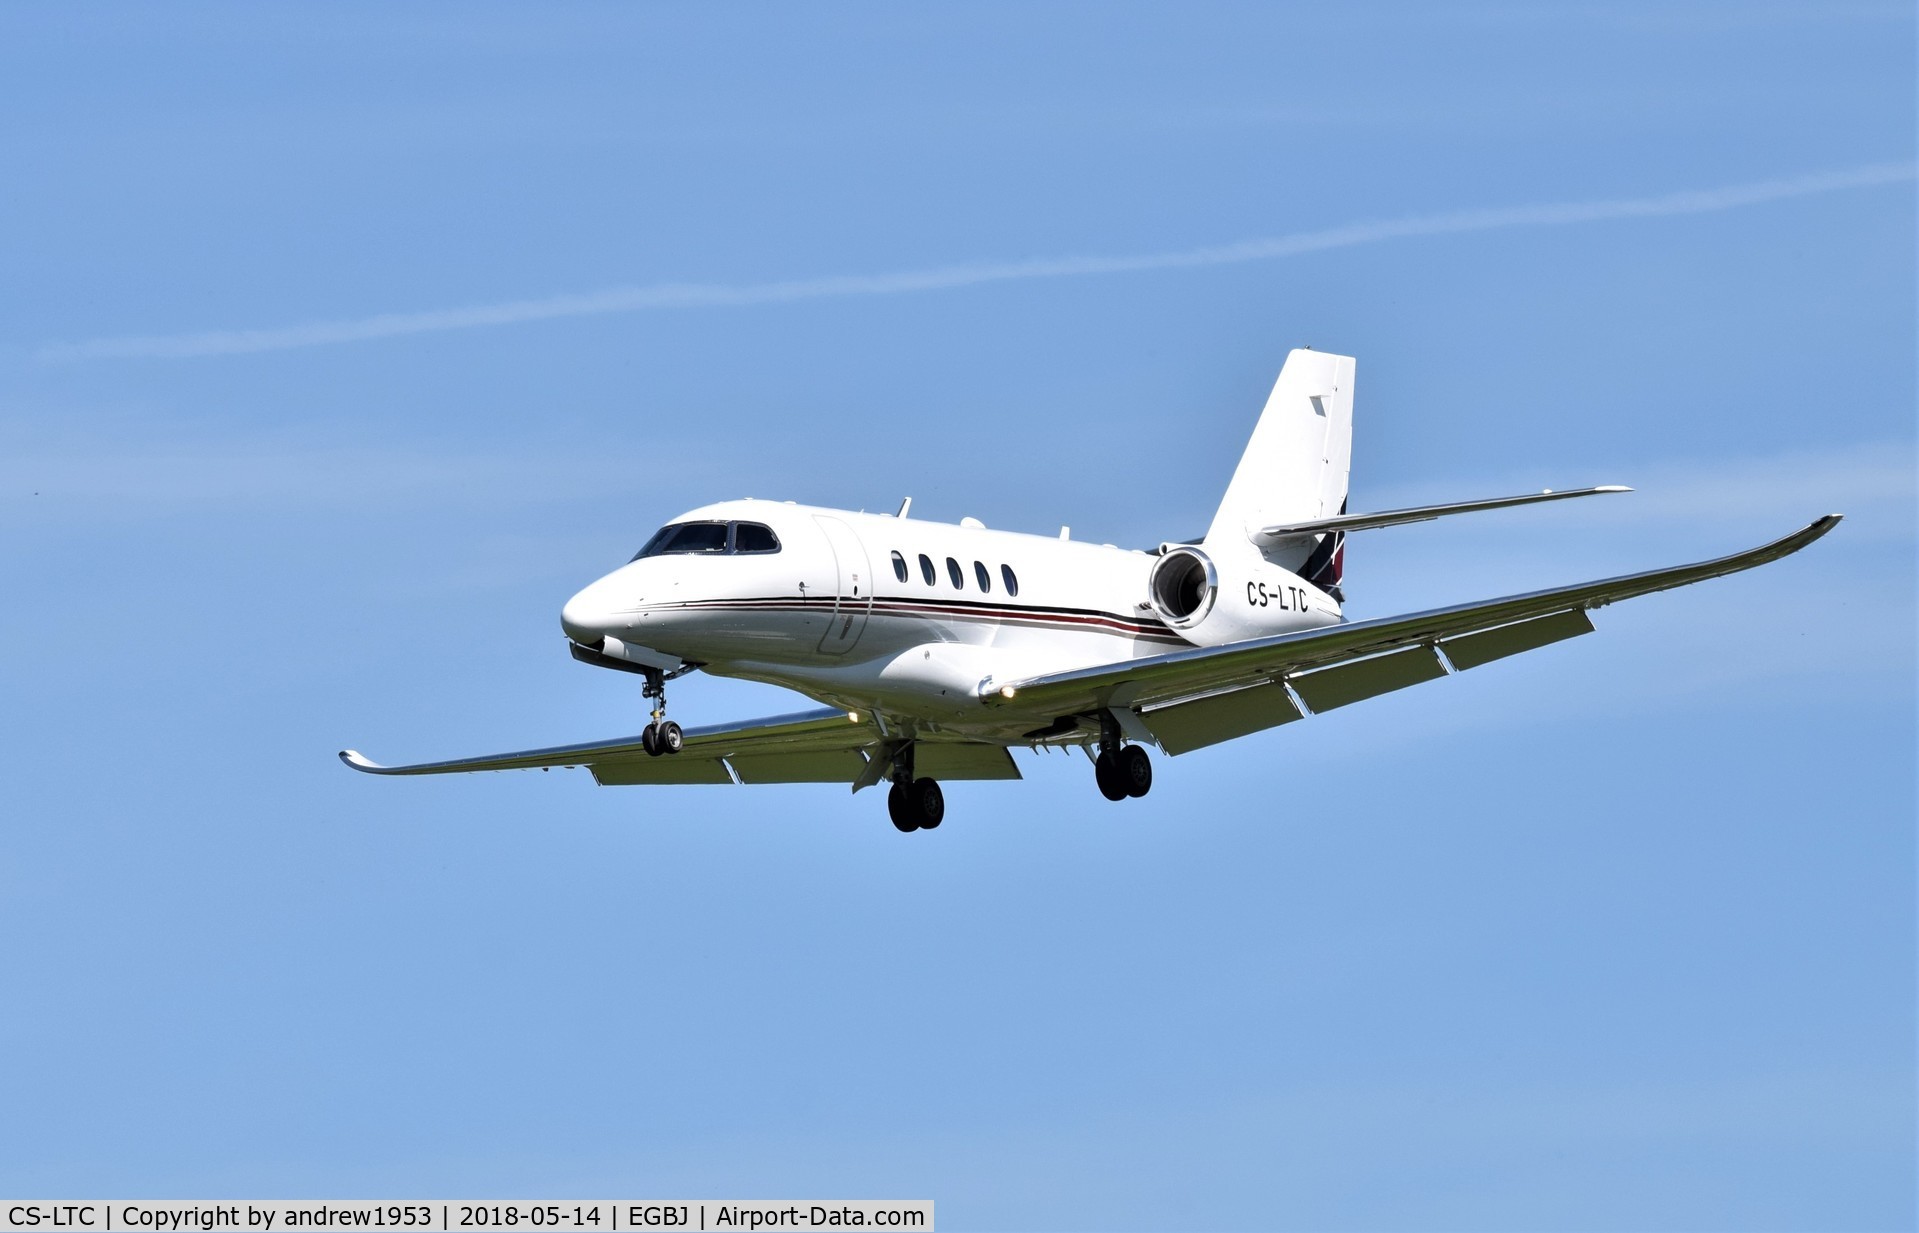 CS-LTC, 2017 Cessna 680A Citation Latitude C/N 680A-0070, CS-LTC landing at Gloucestershire Airport.